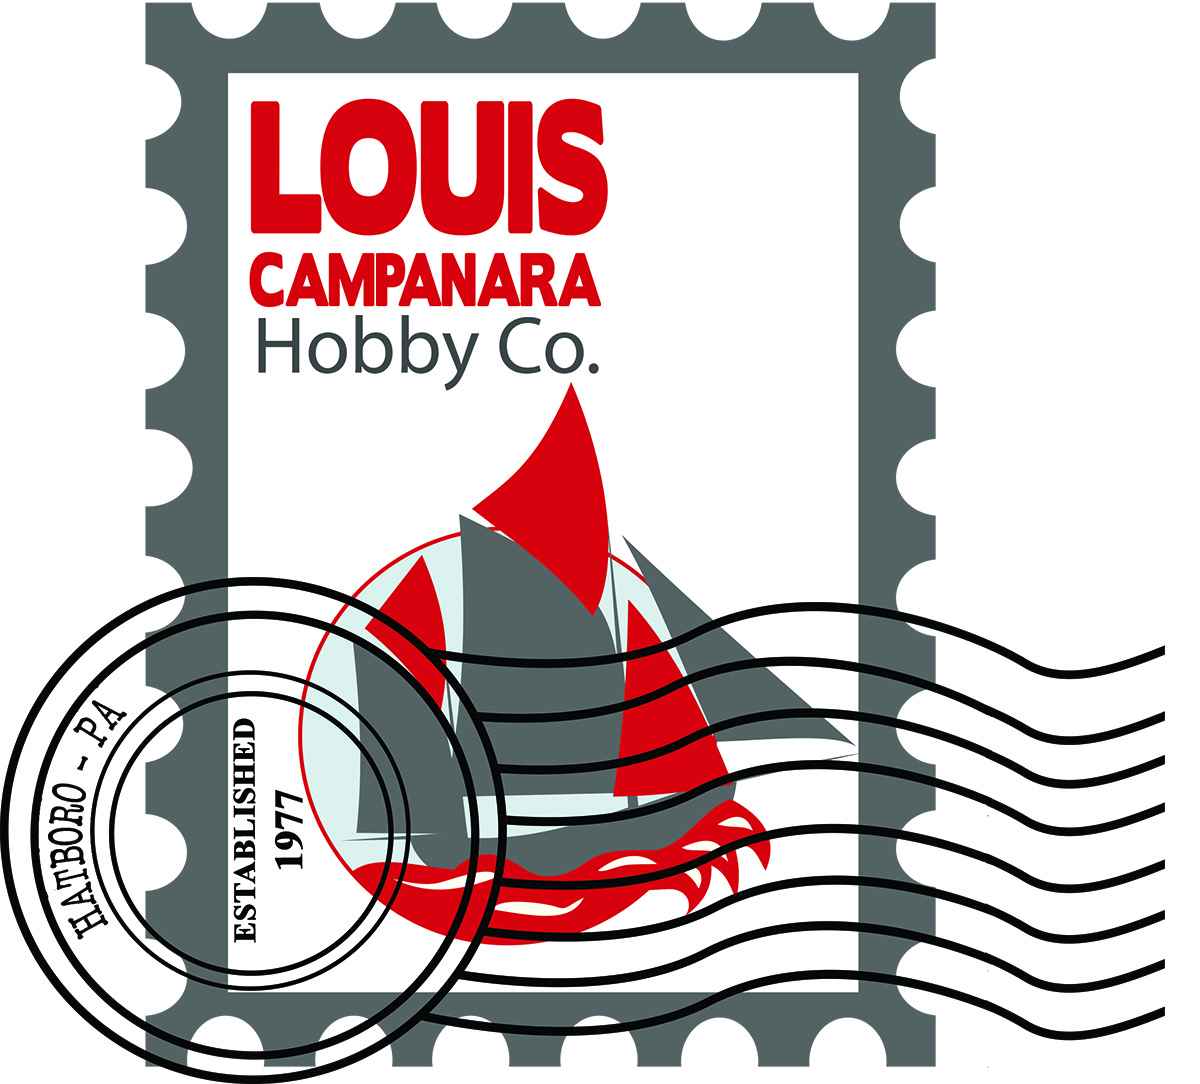 LOUIS CAMPANARA Hobby Co.